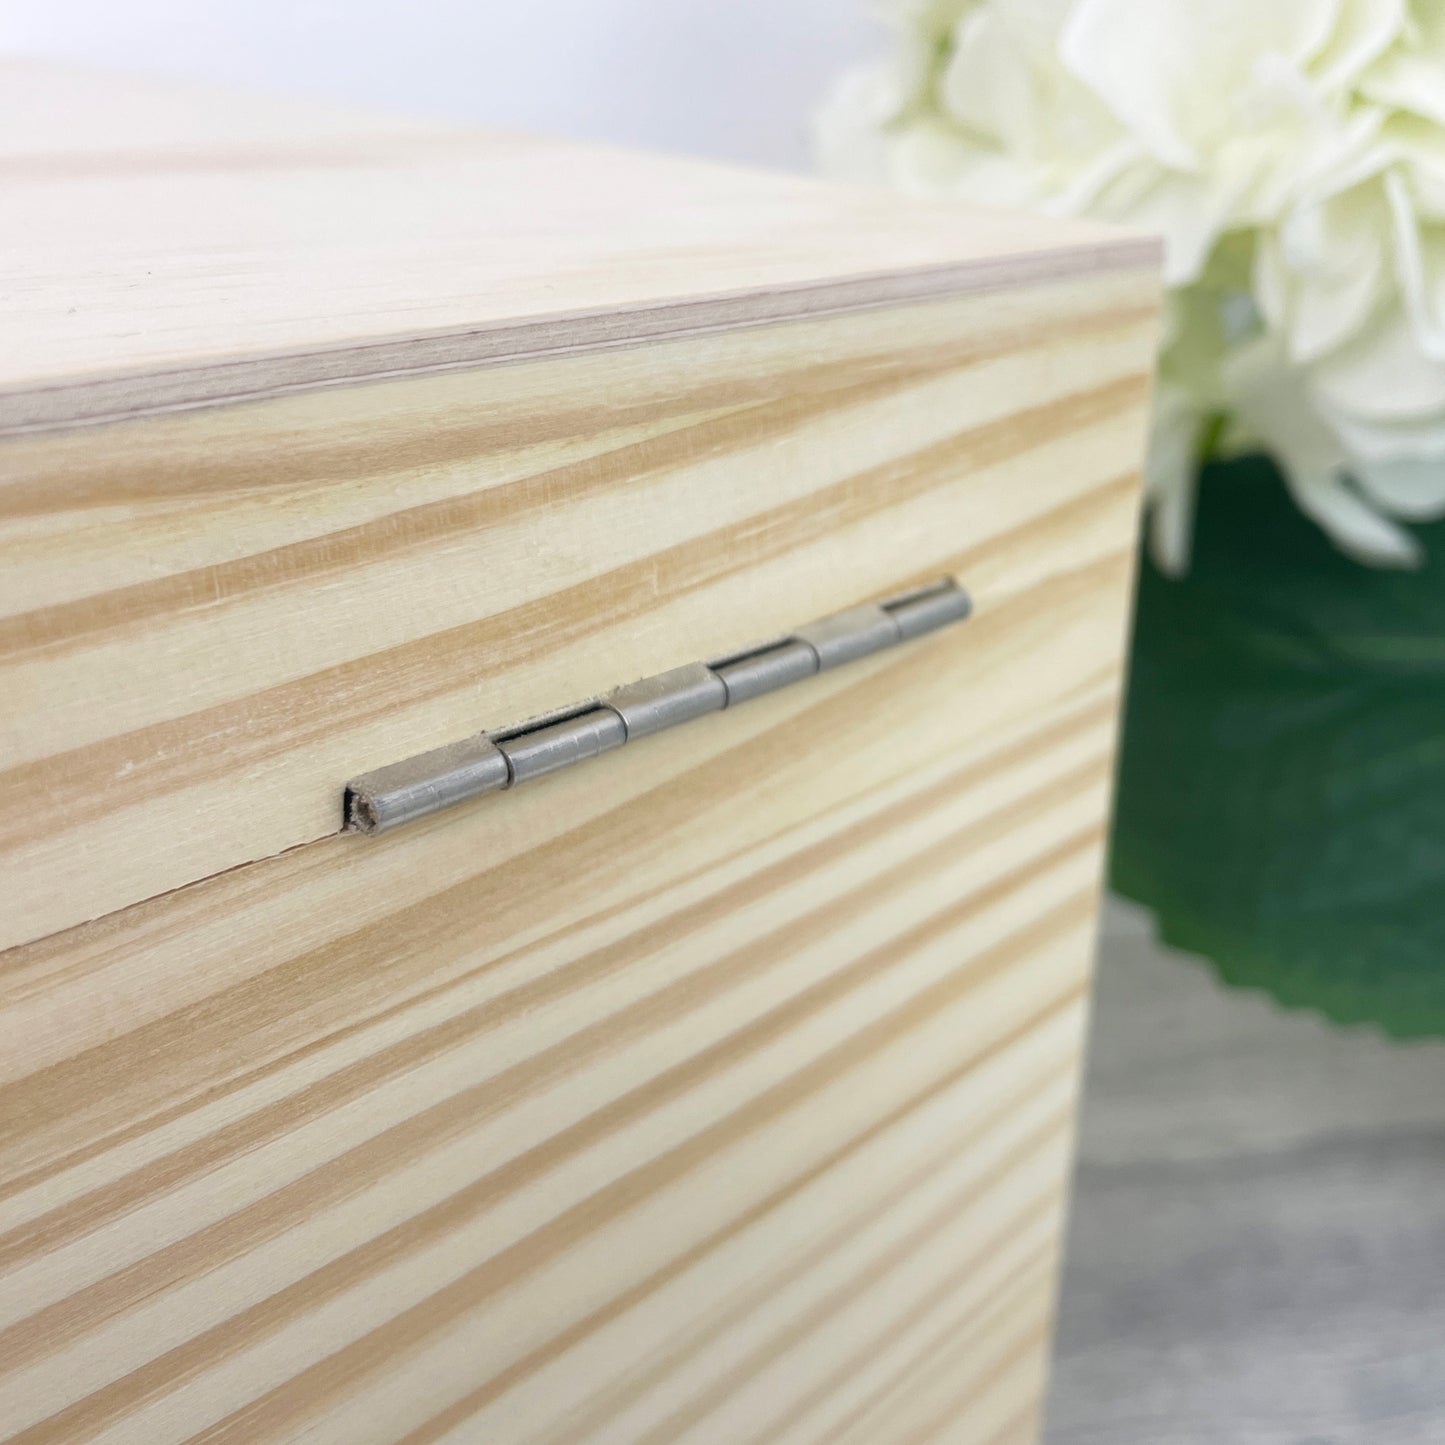 Personalised Pine Wooden Boho Wedding Keepsake Memory Box - 5 Sizes (16cm | 20cm | 26cm | 30cm | 36cm)